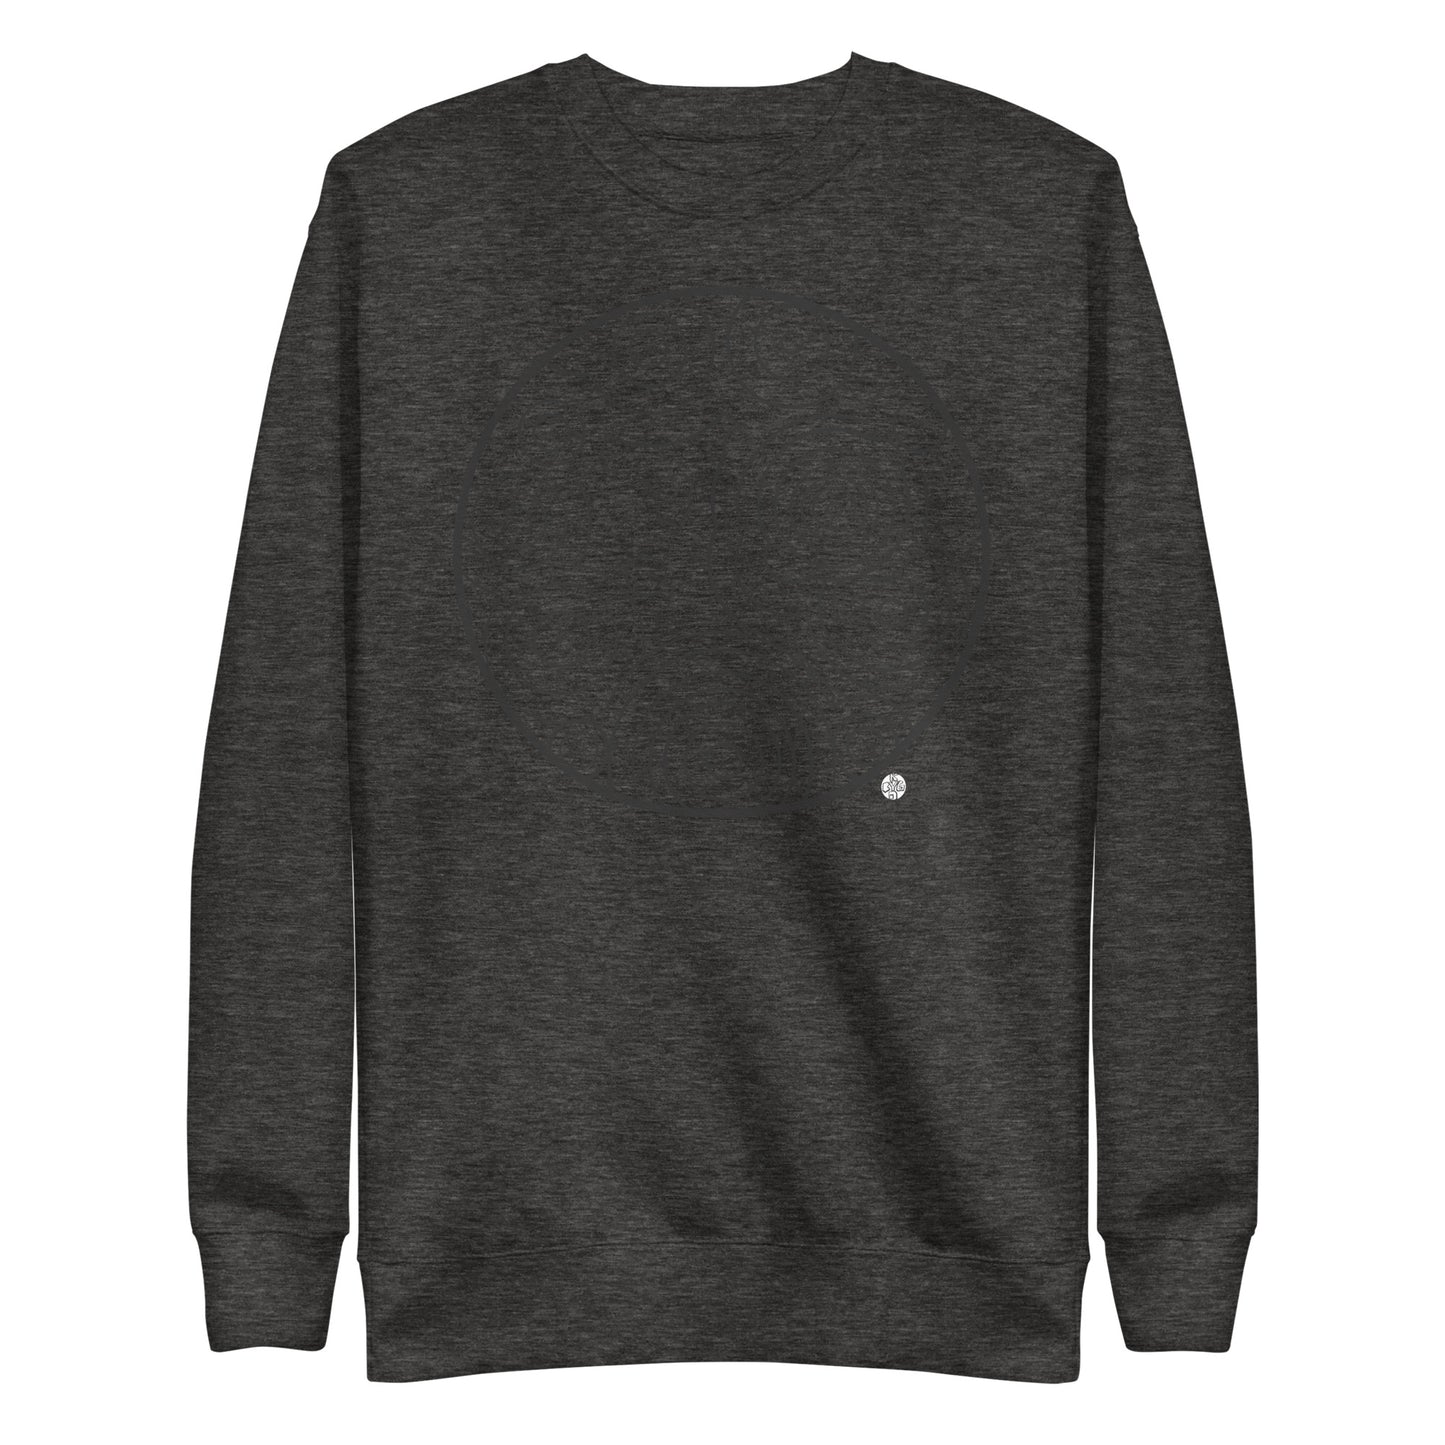 Culture/V4a - Unisex Premium Sweatshirt (S-3XL)